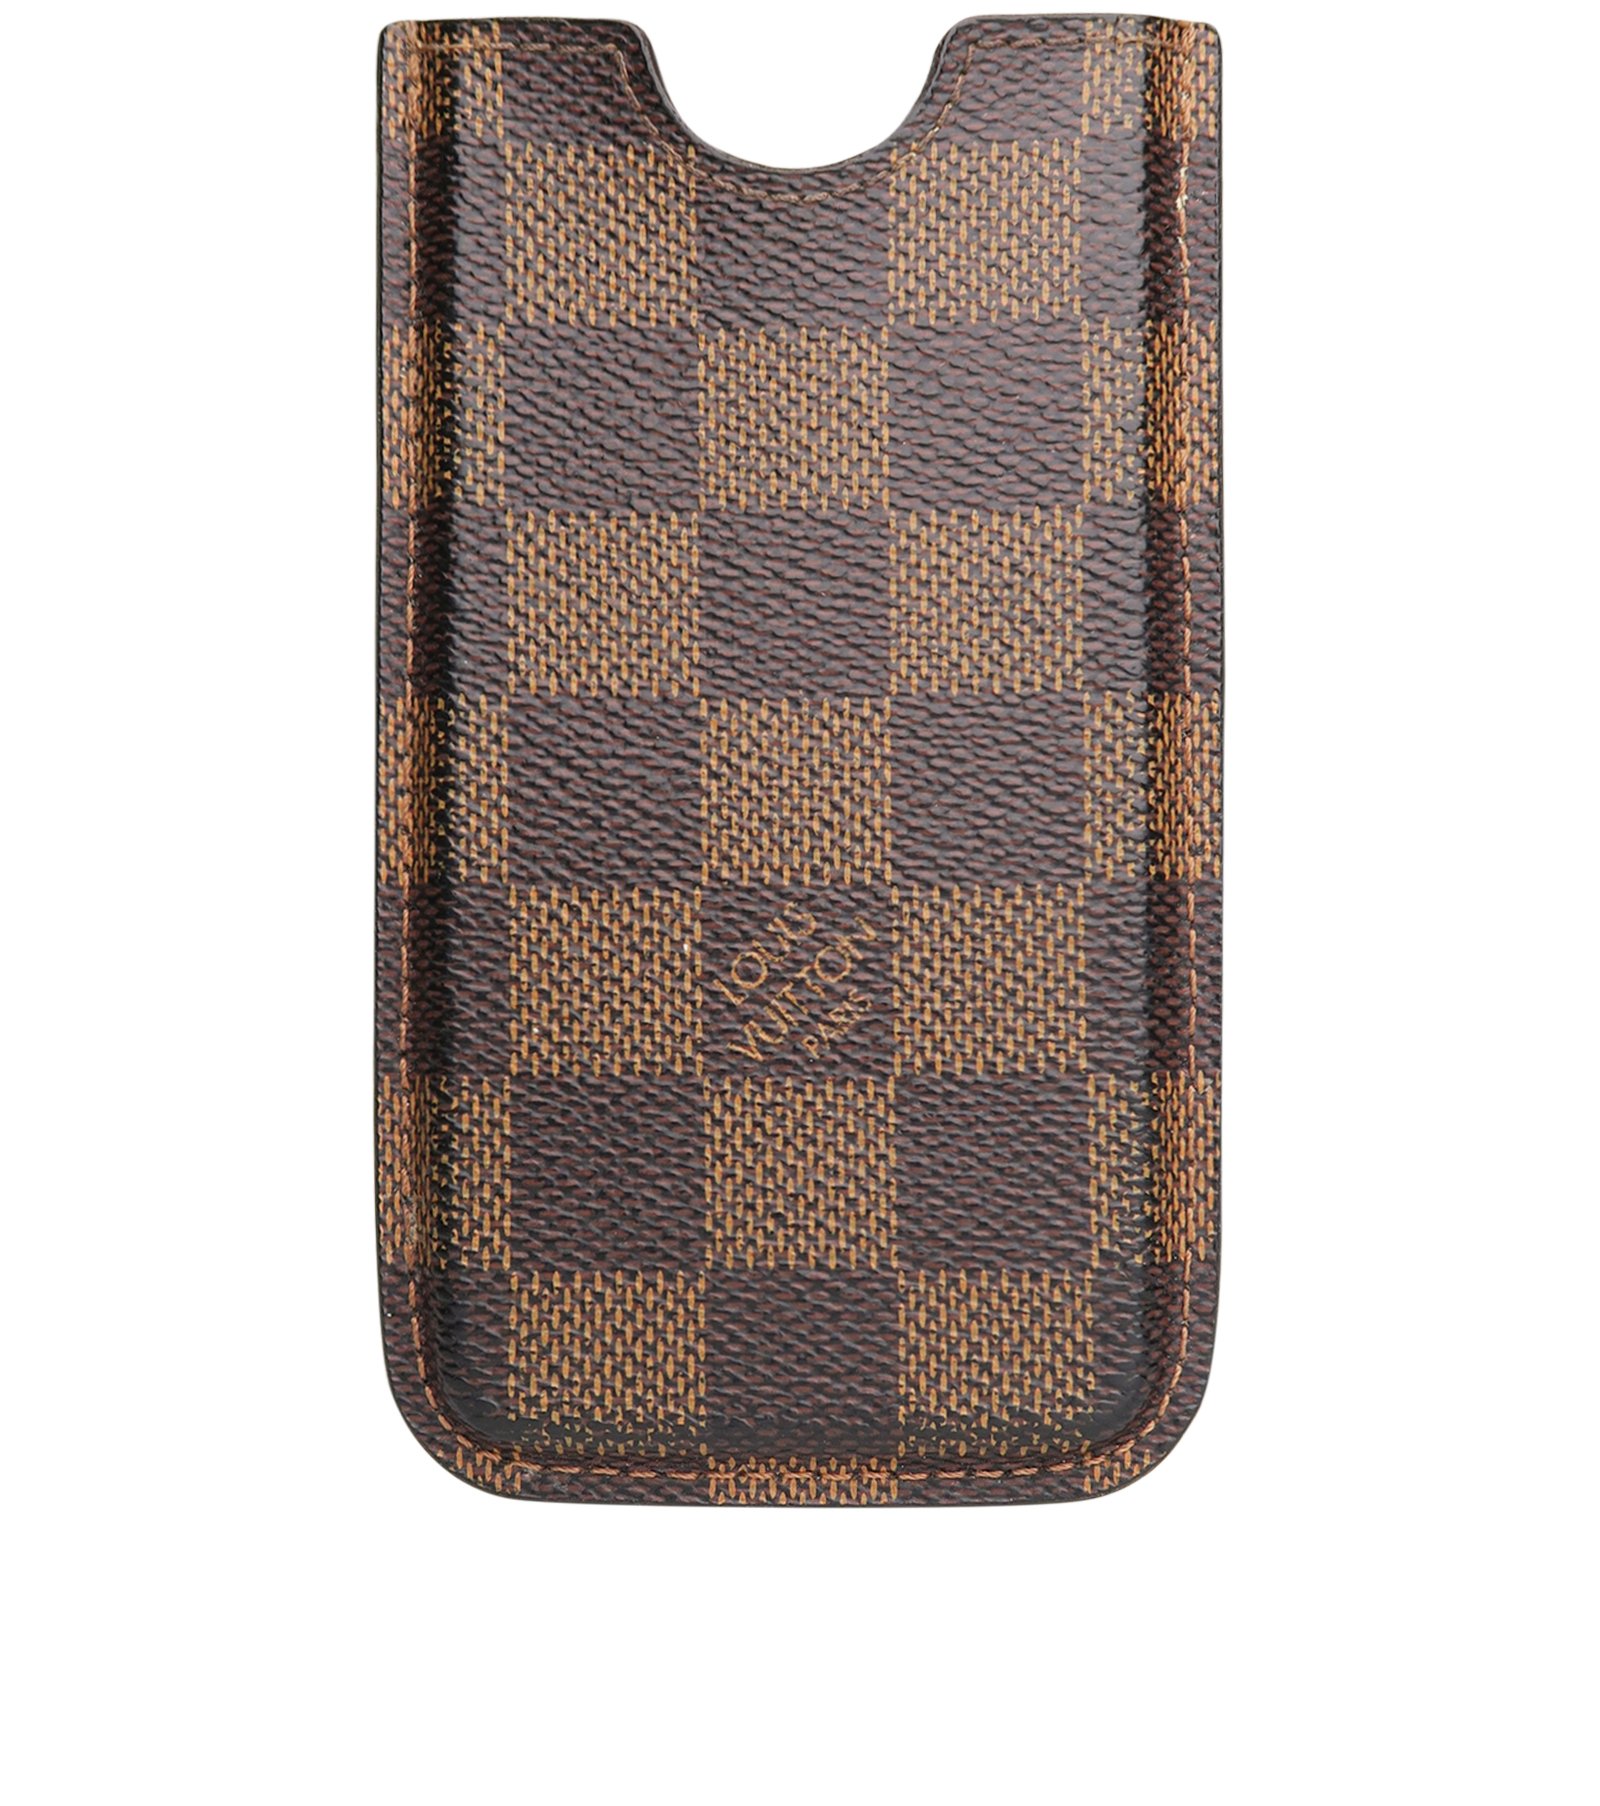 Louis Vuitton Iphone 5 Phone Case, Small Leather Goods - Designer